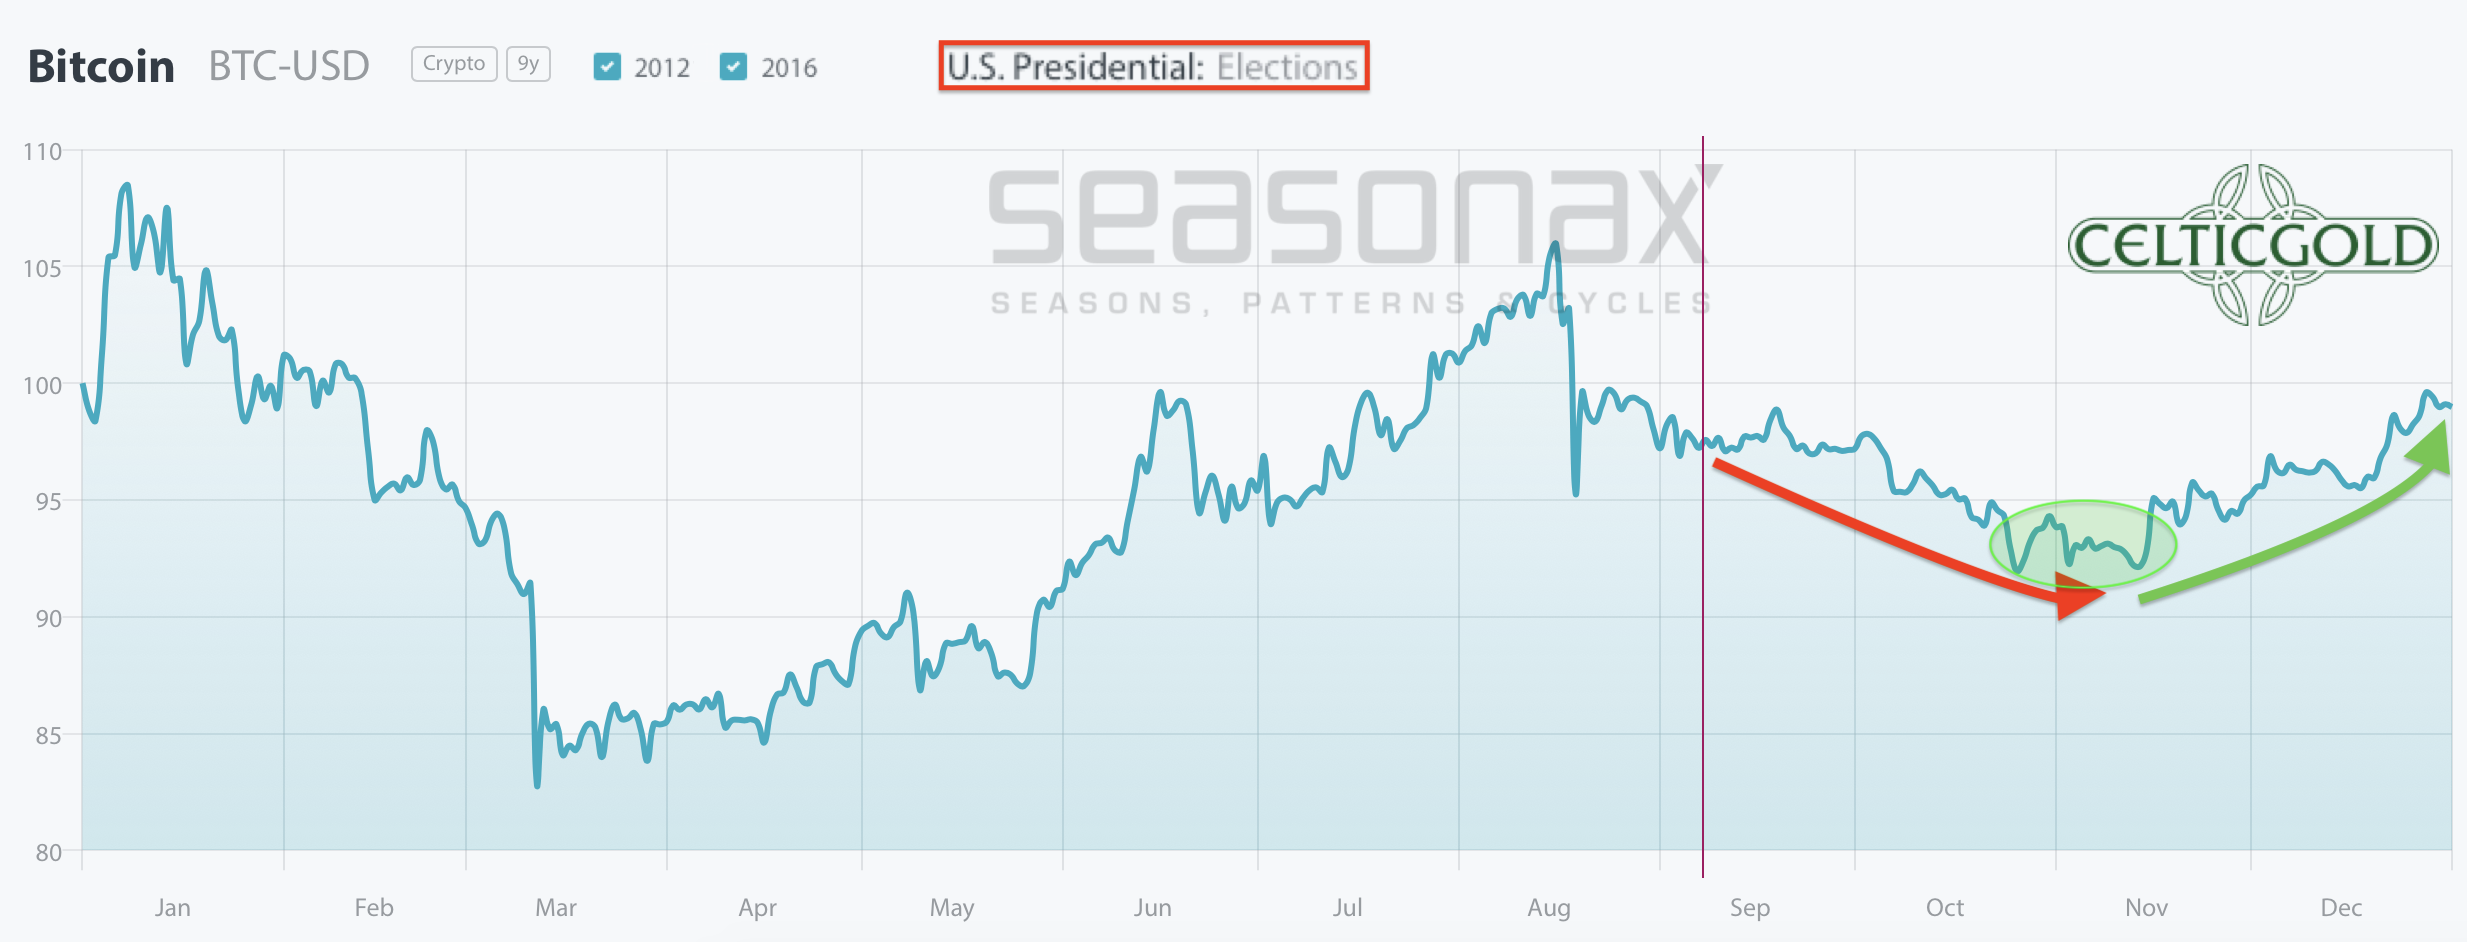 Bitcoin seasonality in US election years. Source: Seasonax